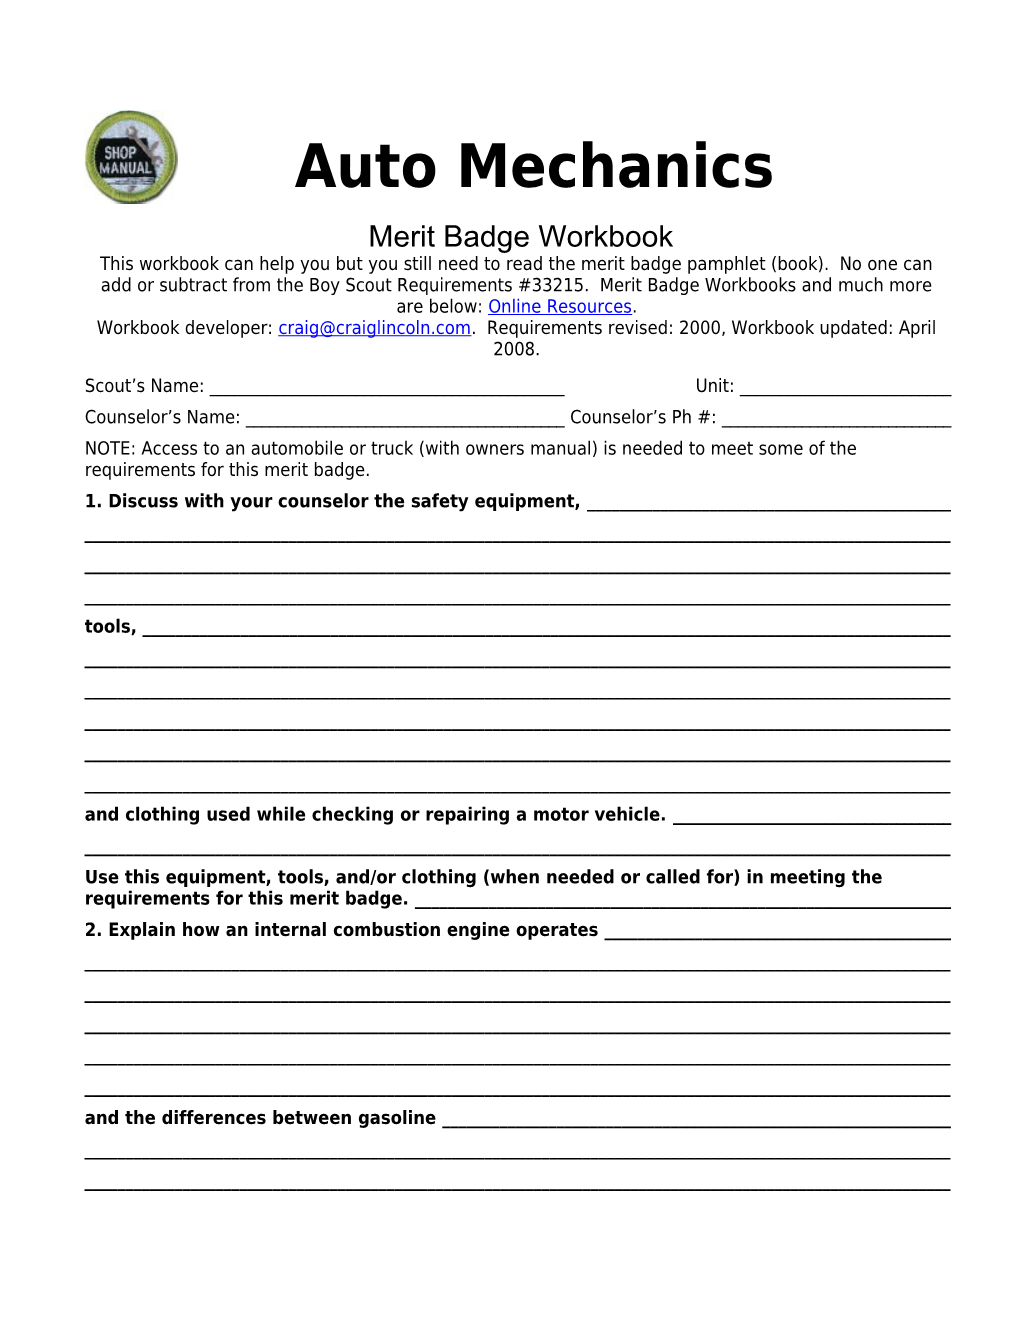 Auto Mechanics P. 1 Merit Badge Workbookscout's Name: ______